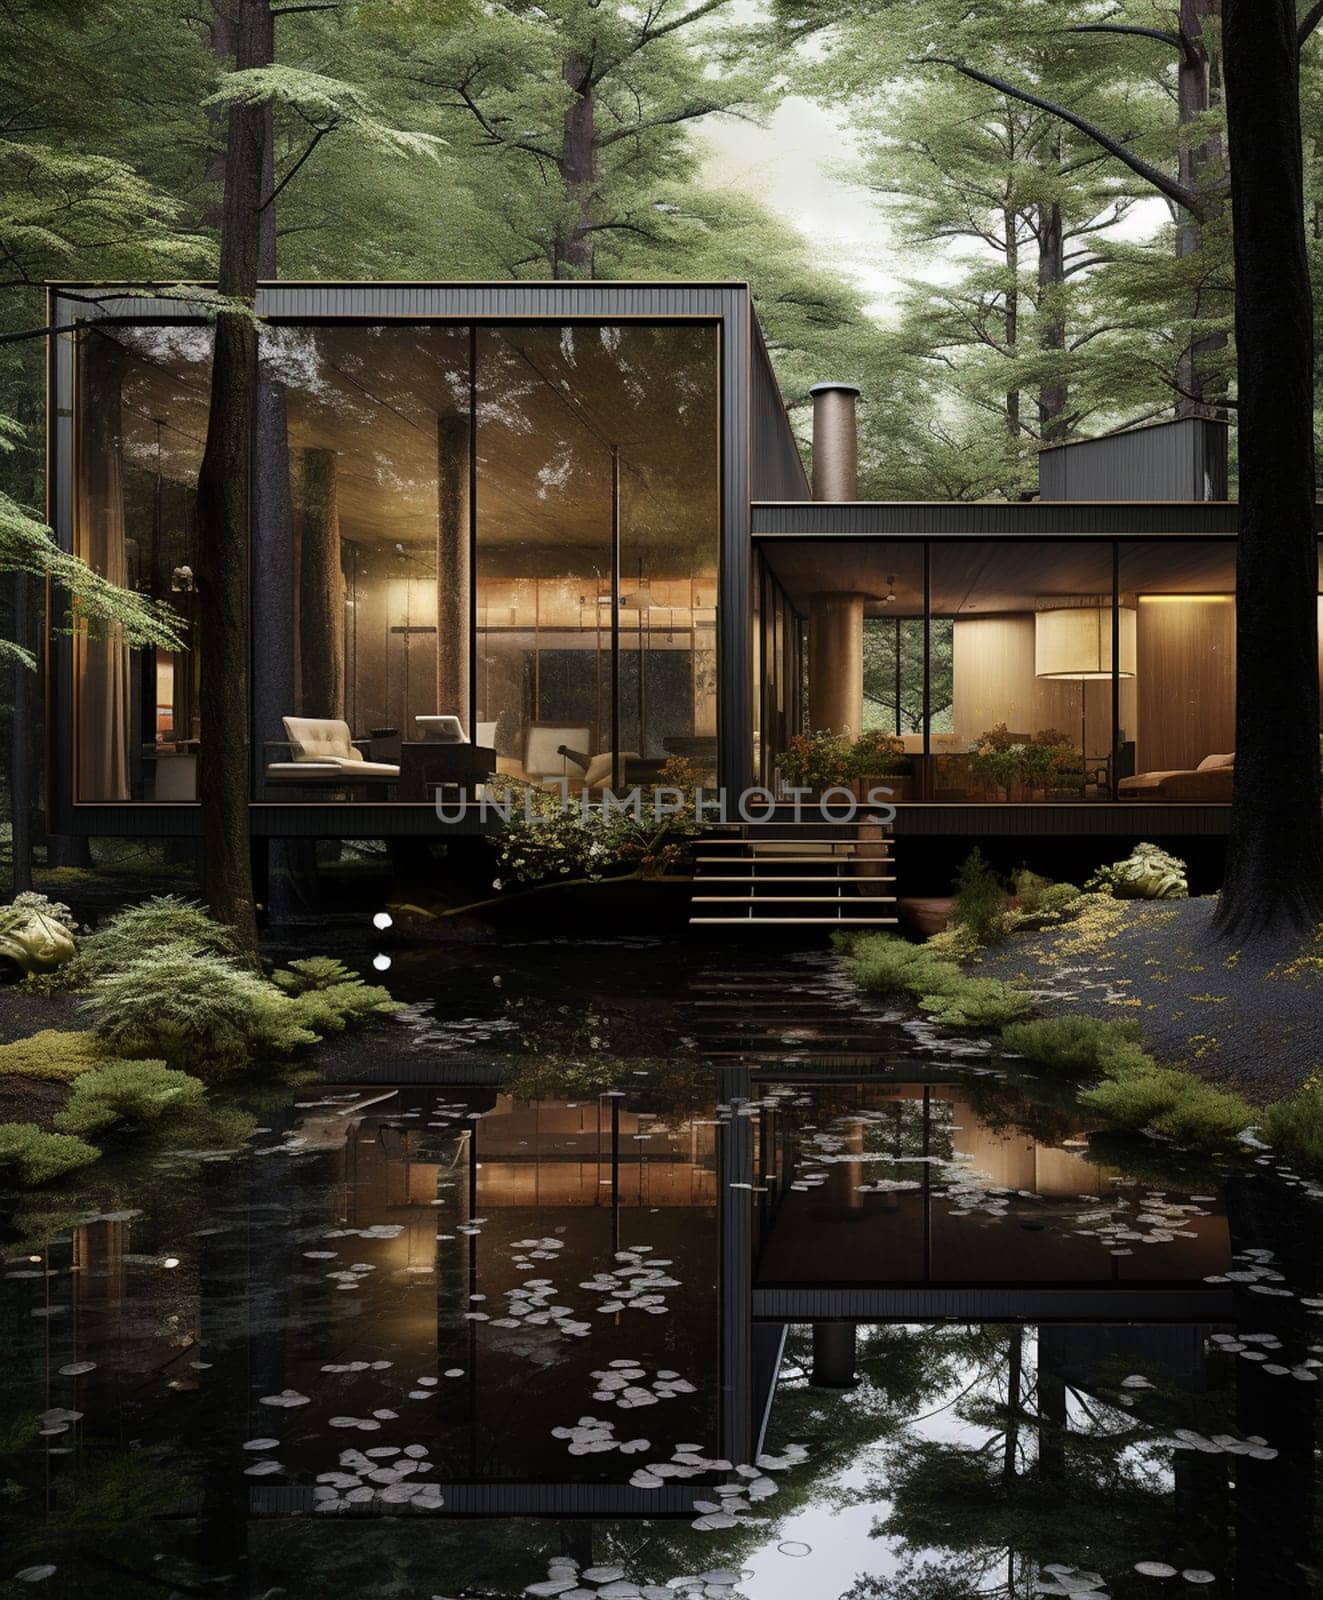 Luxury modular house exterior. 3d illustration by Andelov13